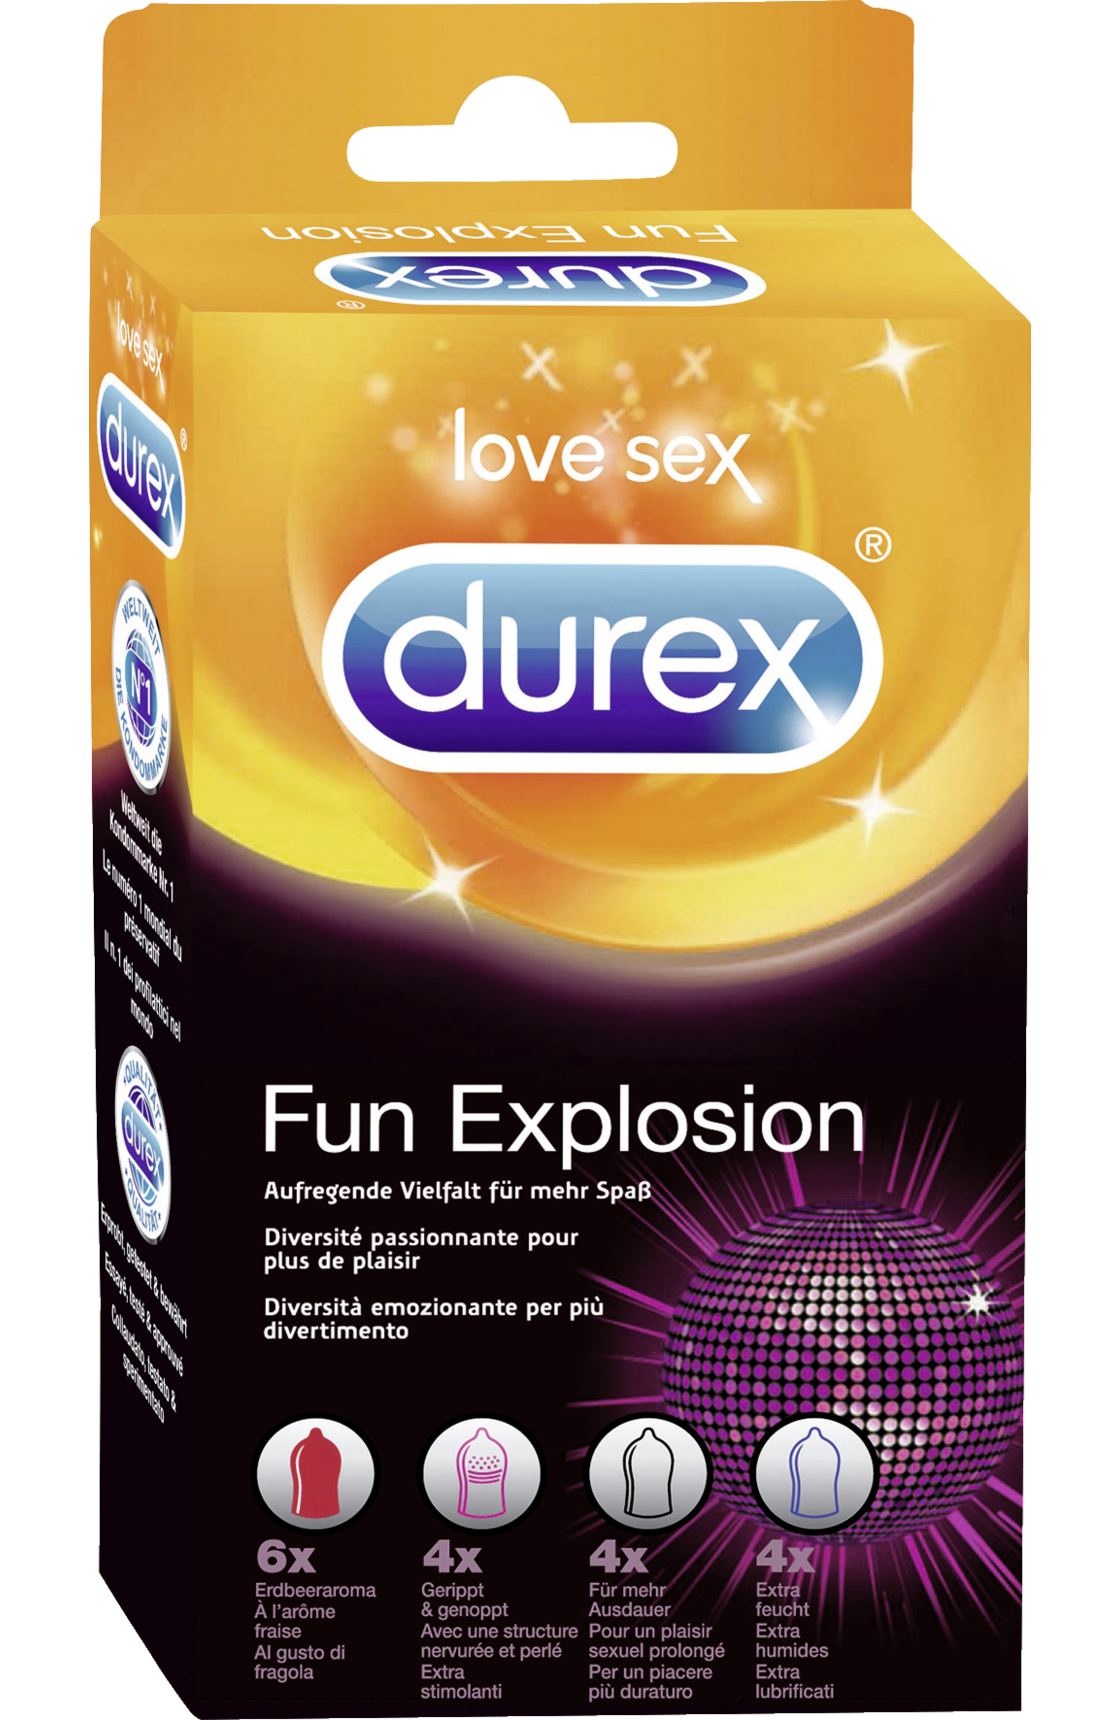 Kondom Durex